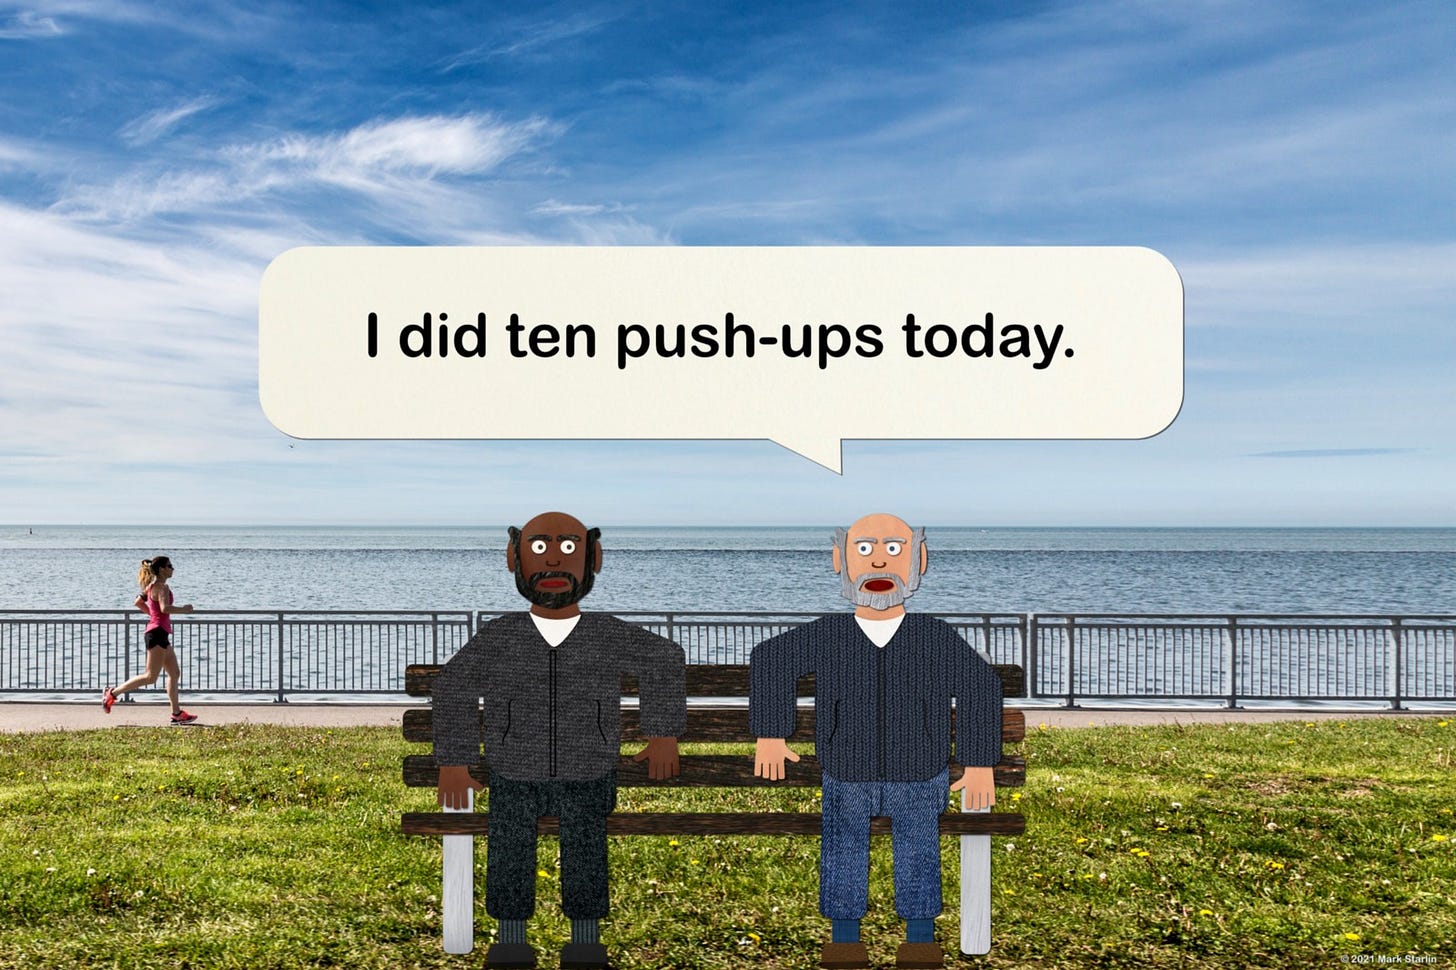 Man says, “I did ten push-ups today.”